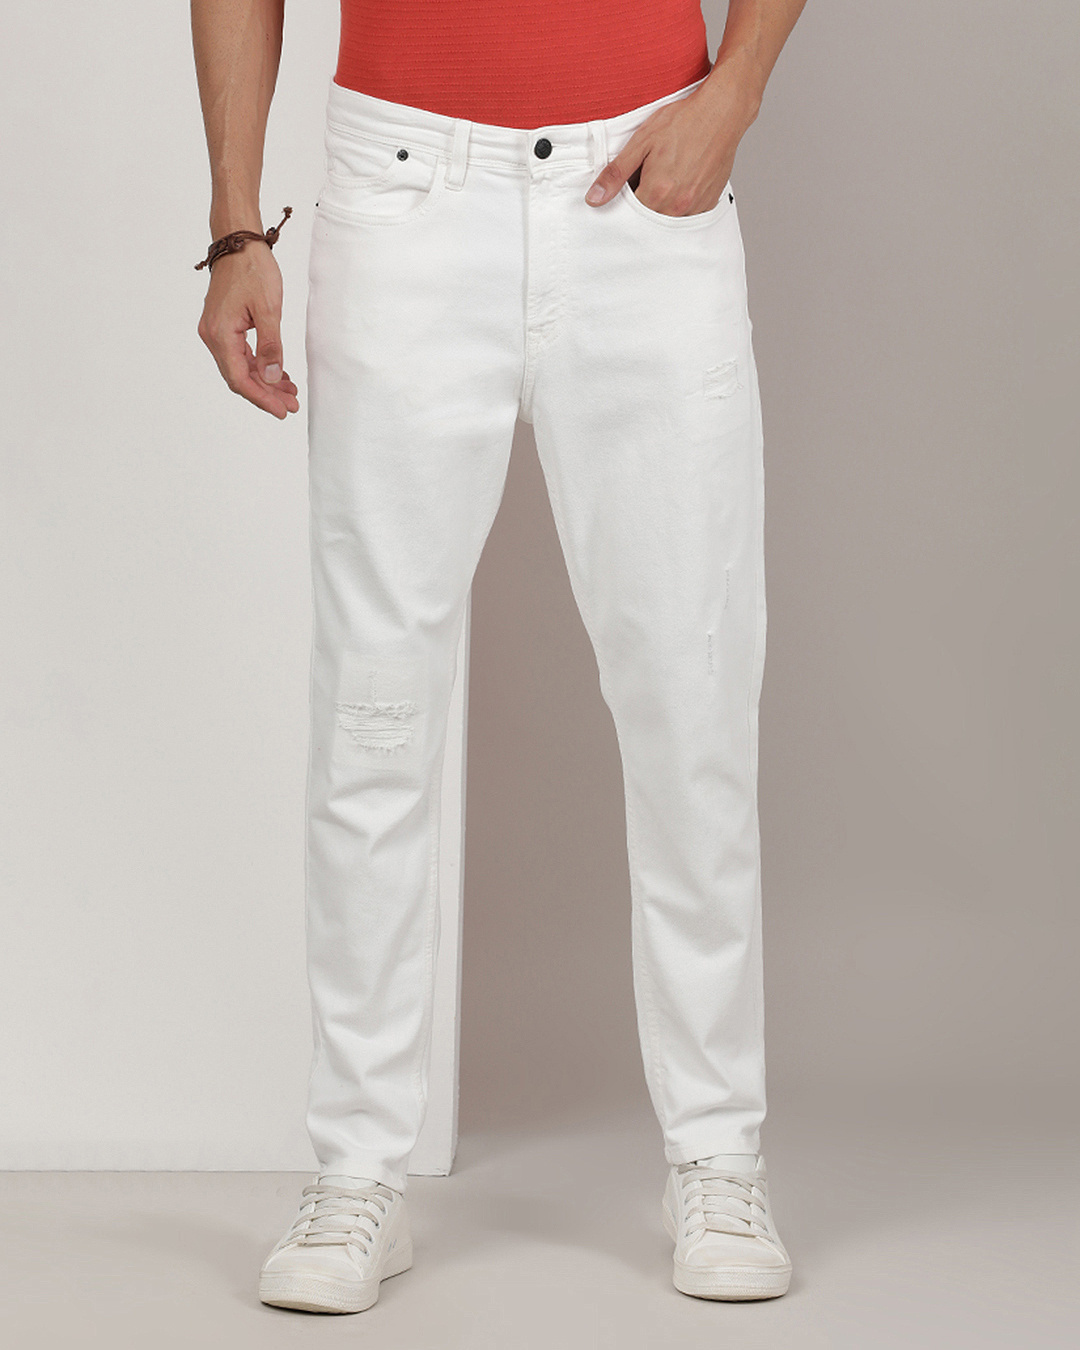 Buy Men's White Distressed Jeans Online at Bewakoof